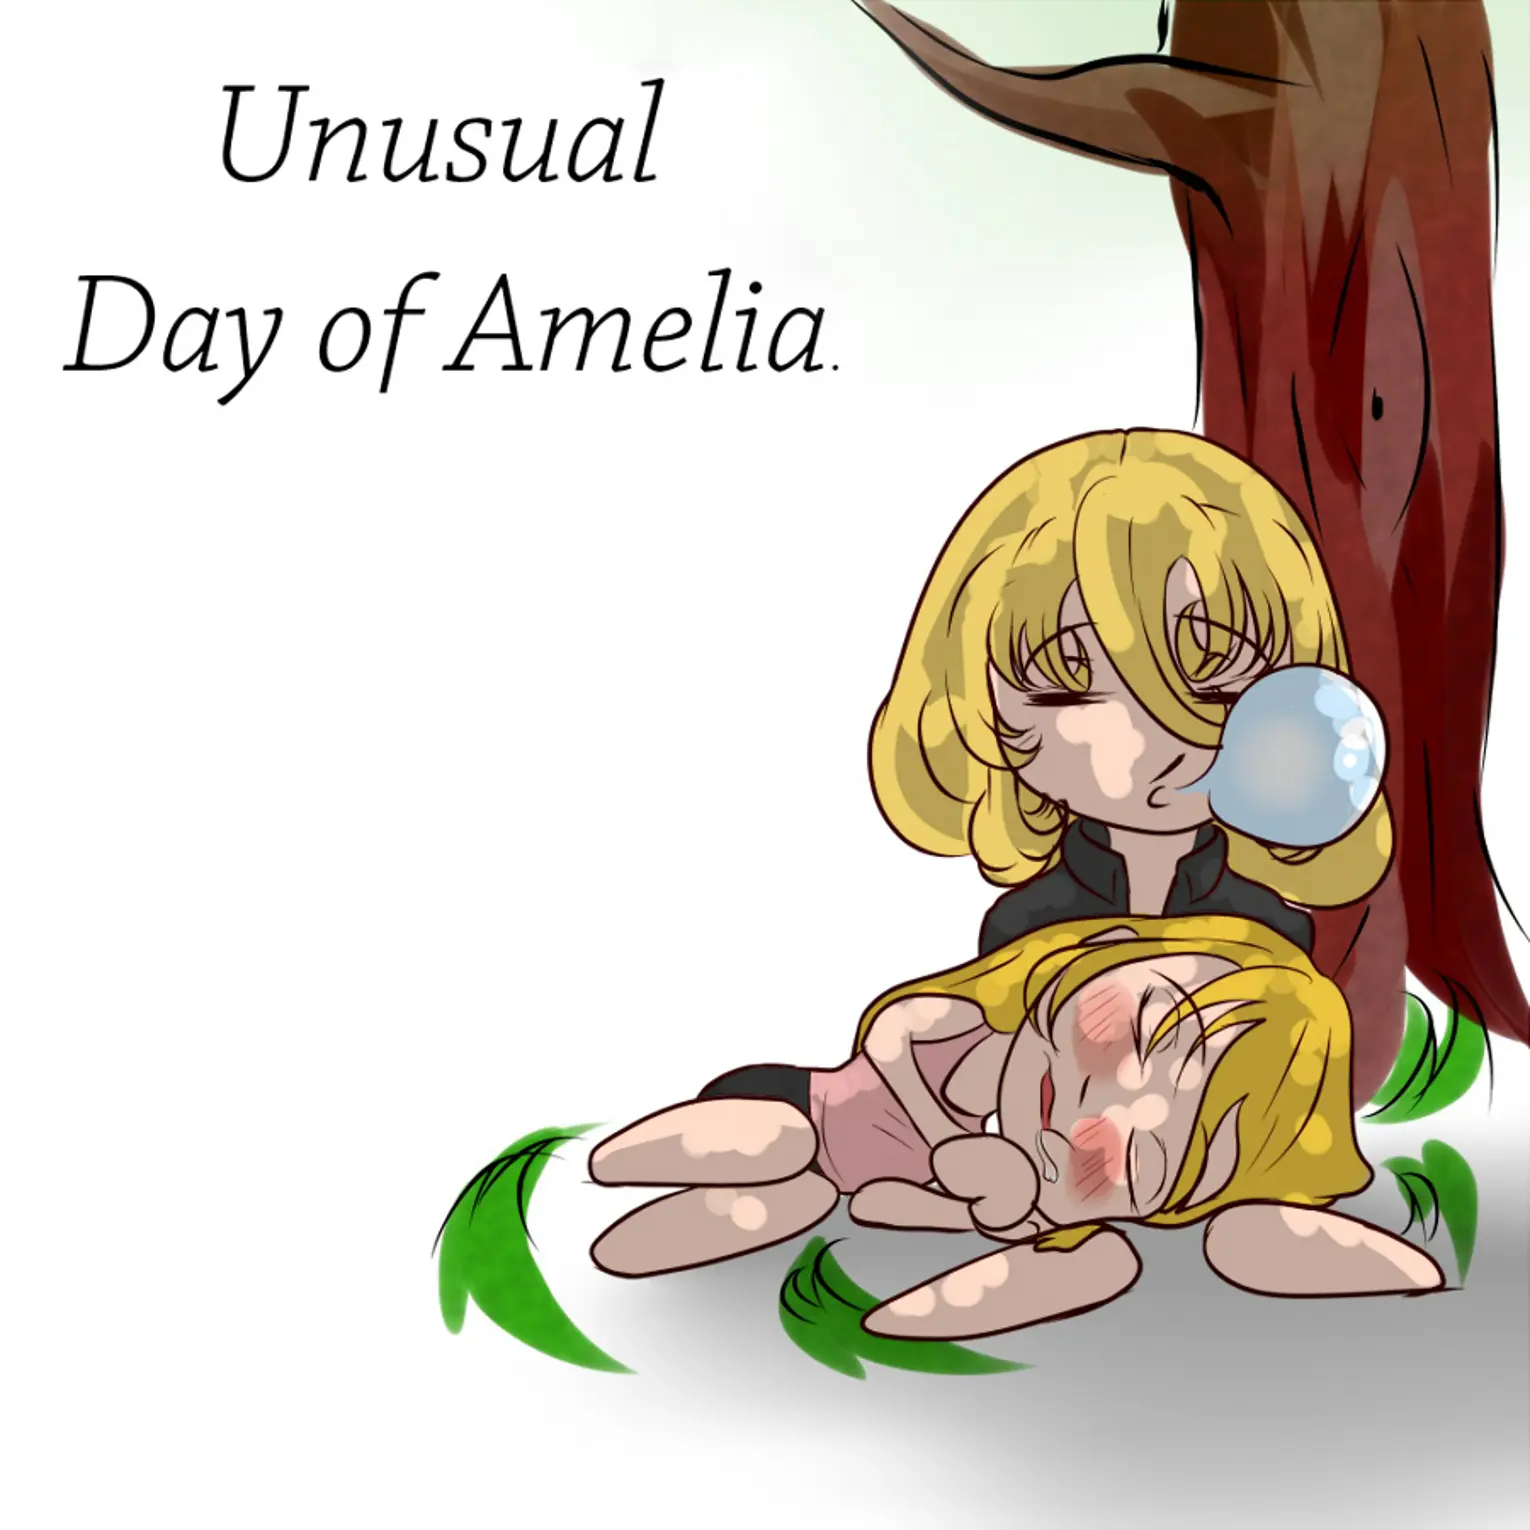 Unusual Day with Amelia main image